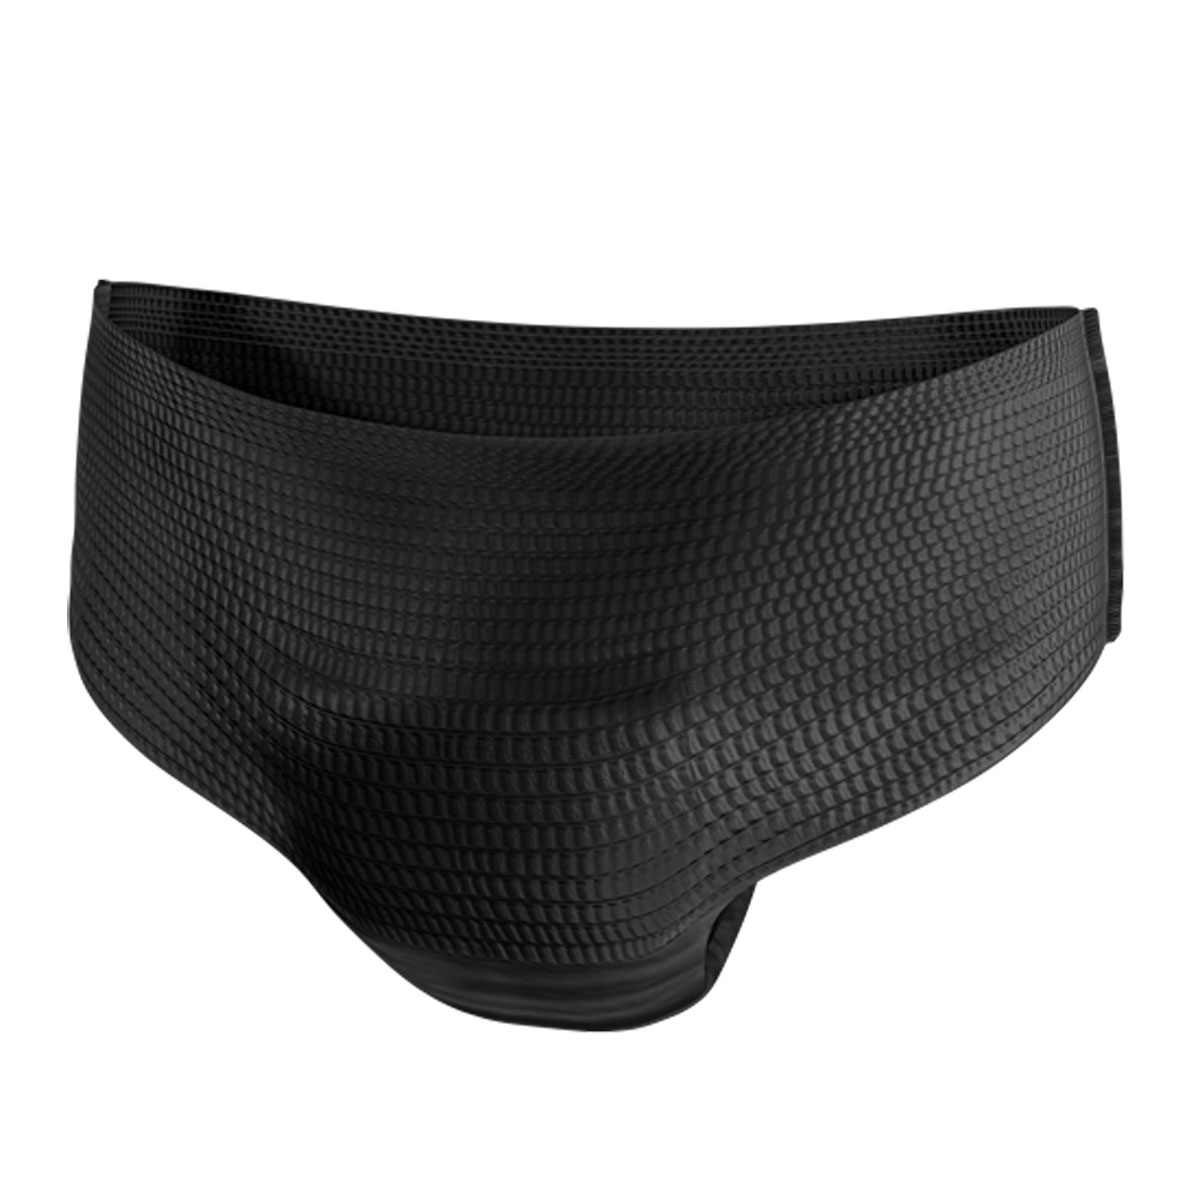 Attends Men Protective Underwear 3 - Pants für Männer - Large (L)